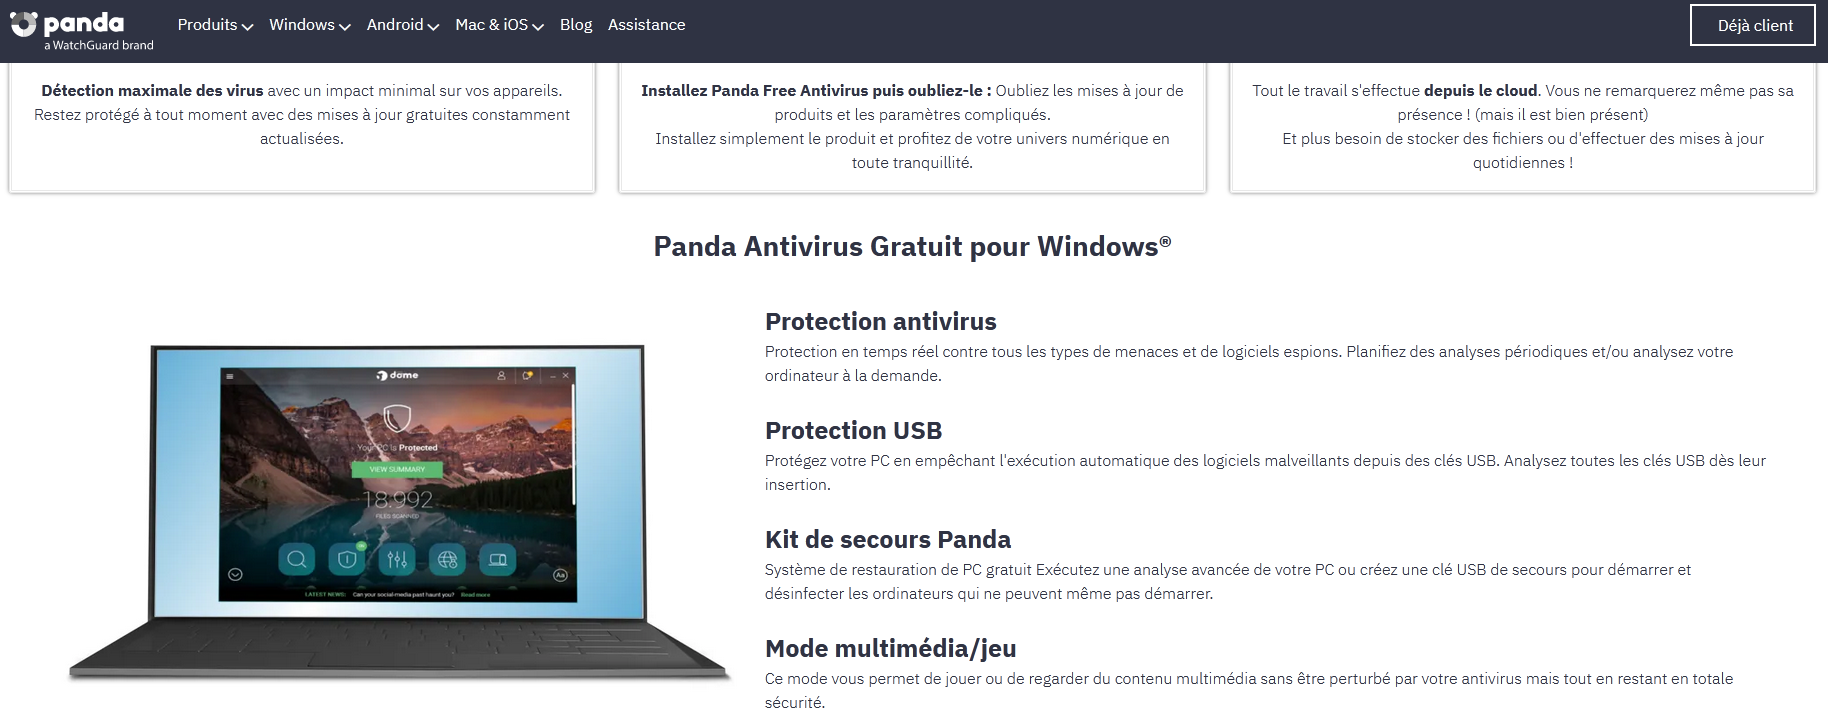 panda antivirus completement gratuit pc windows - kiatoo